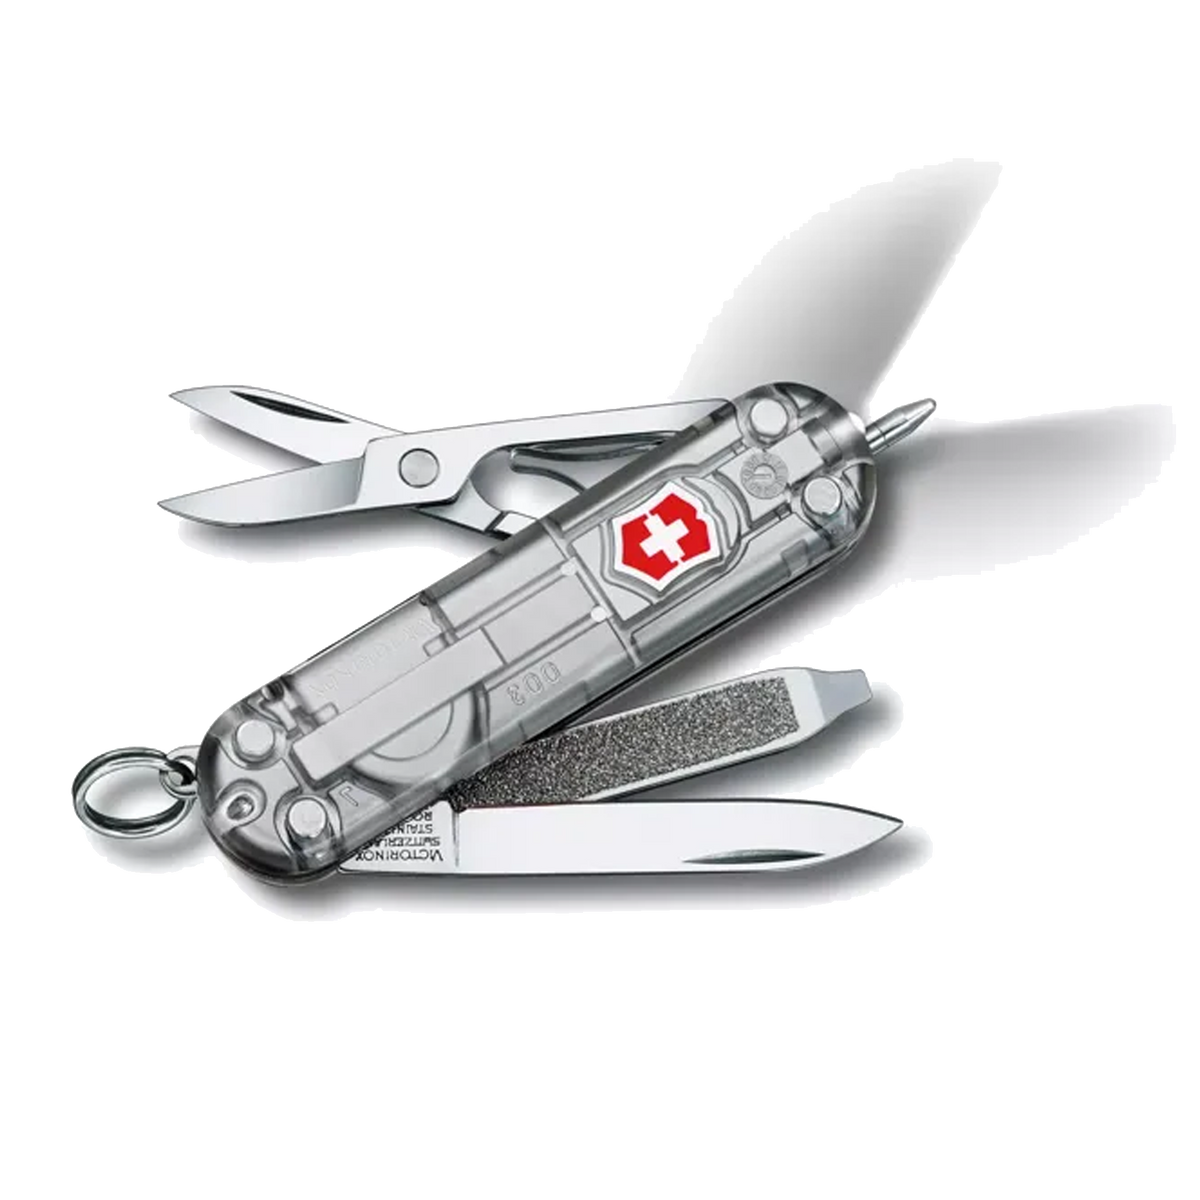 Victorinox - Small Swiss Army Knife - Signature Lite